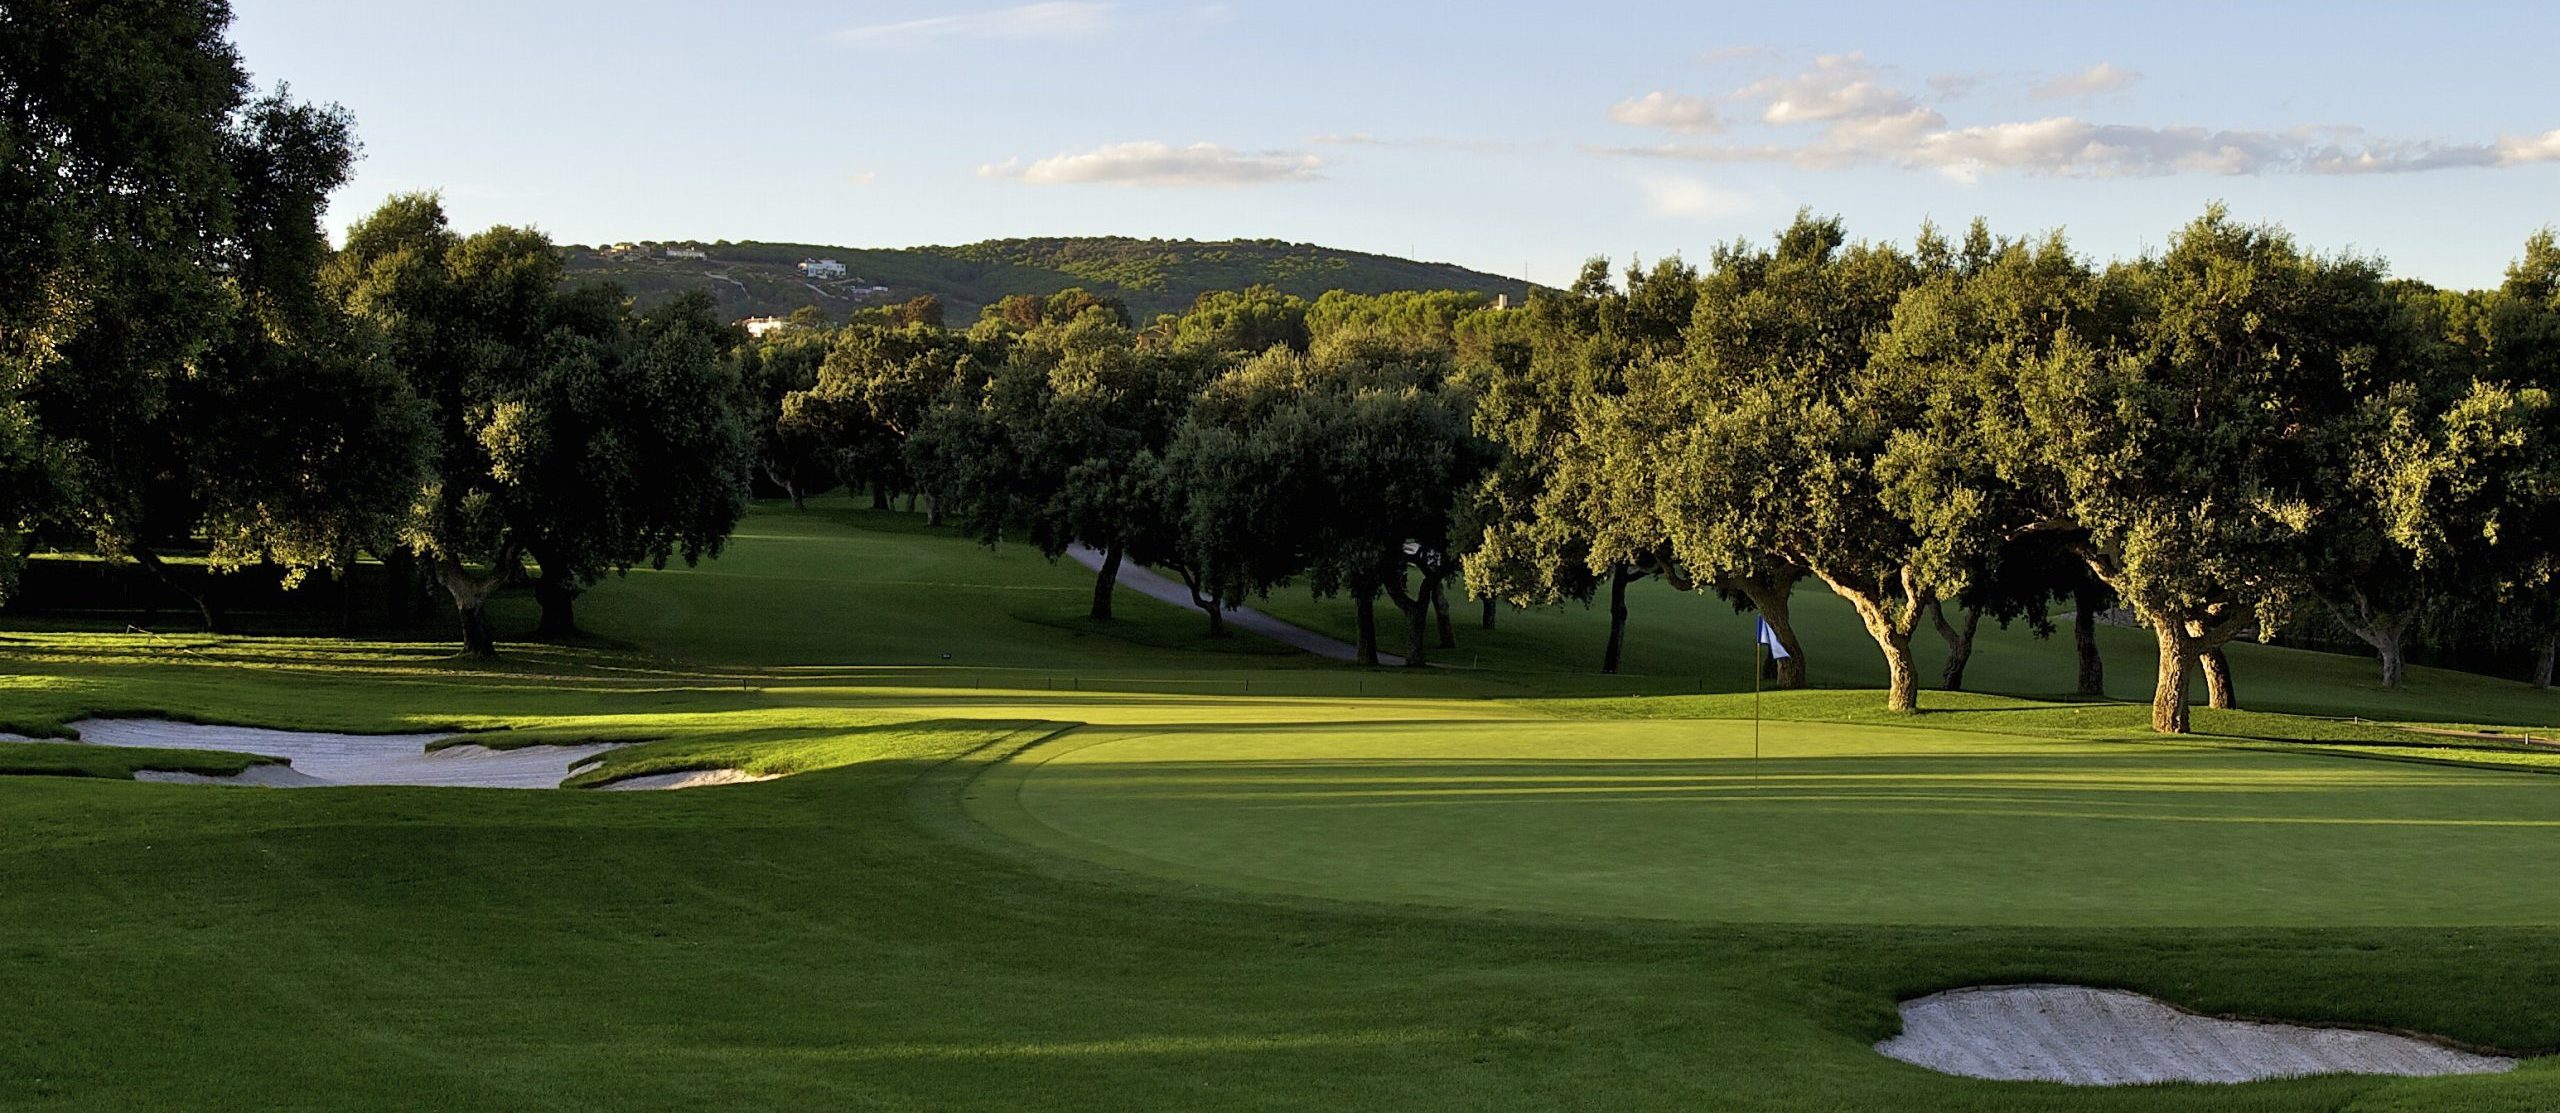 Valderrama Golf Club fairways in Spain